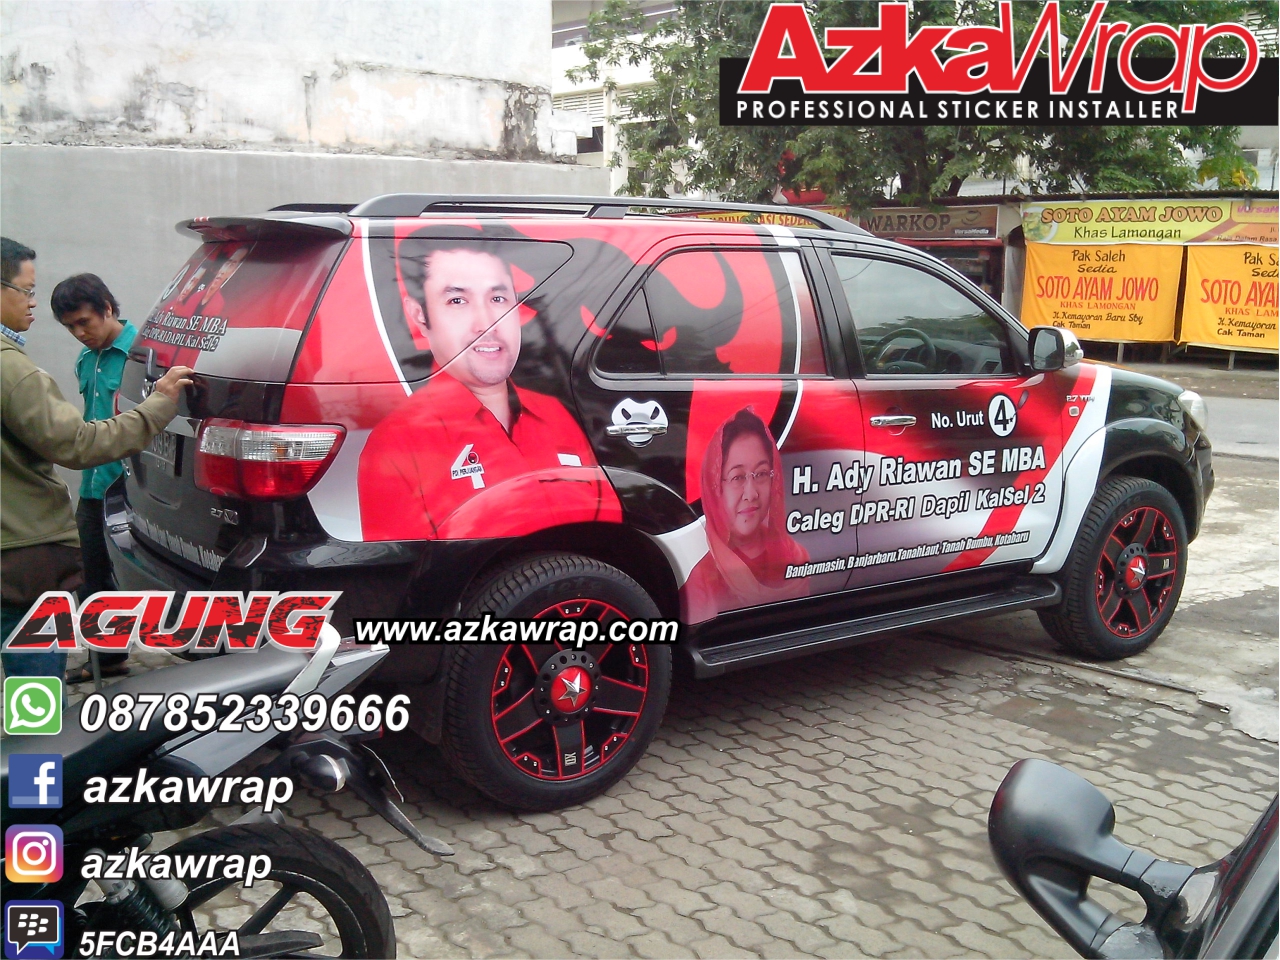 Jasa Branding Sticker Murah Surabaya AzkaWrapcom